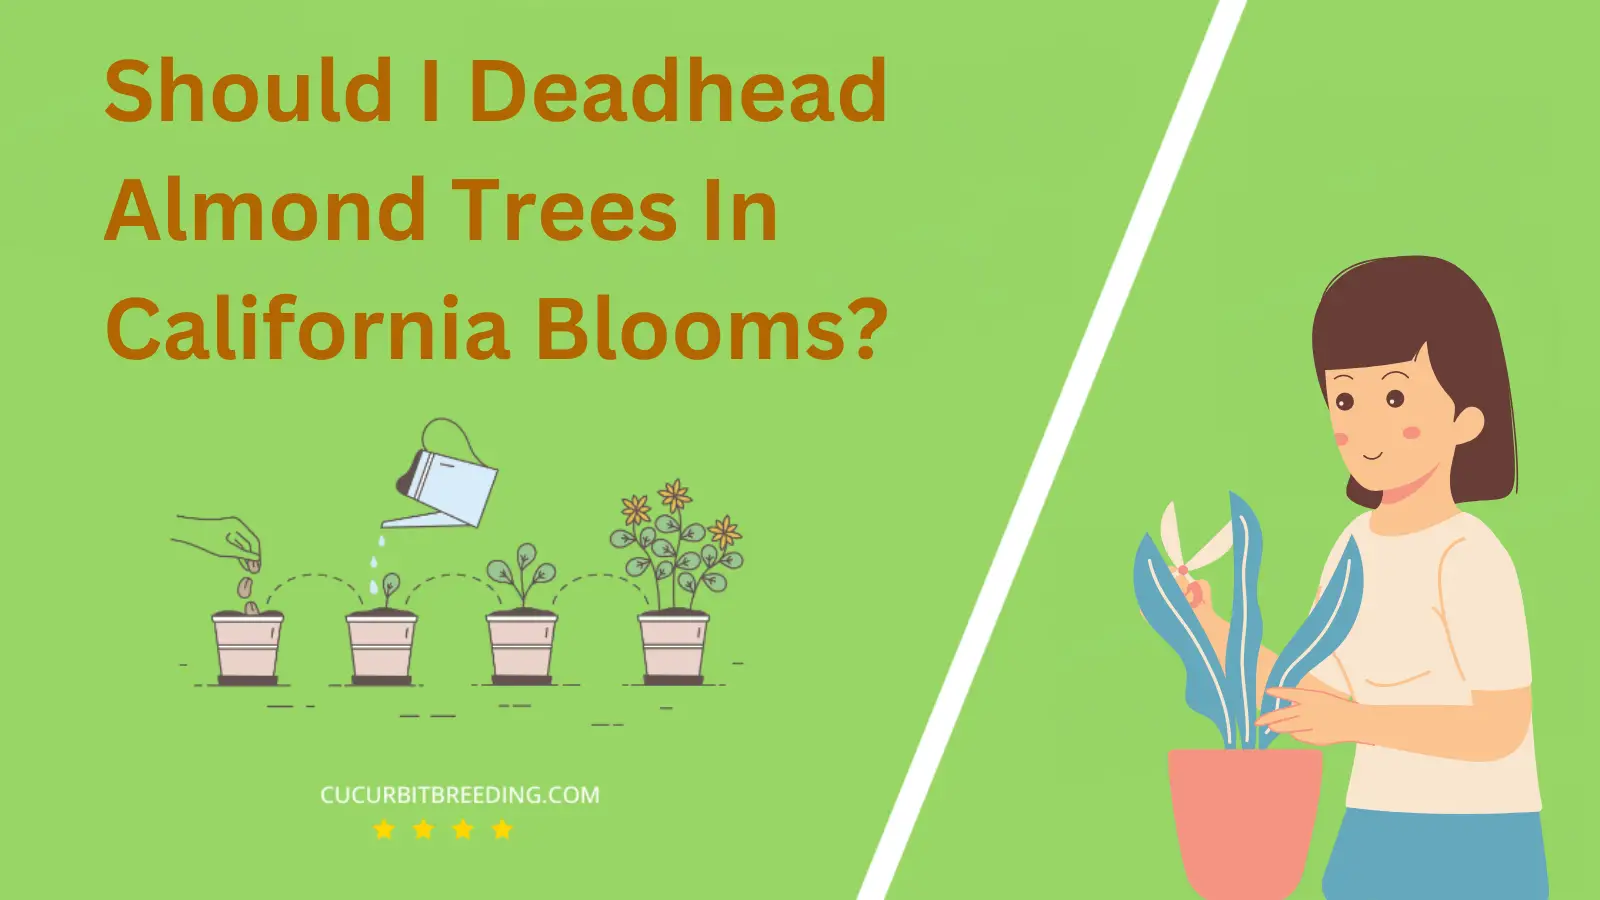 Should I Deadhead Almond Trees In California Blooms?